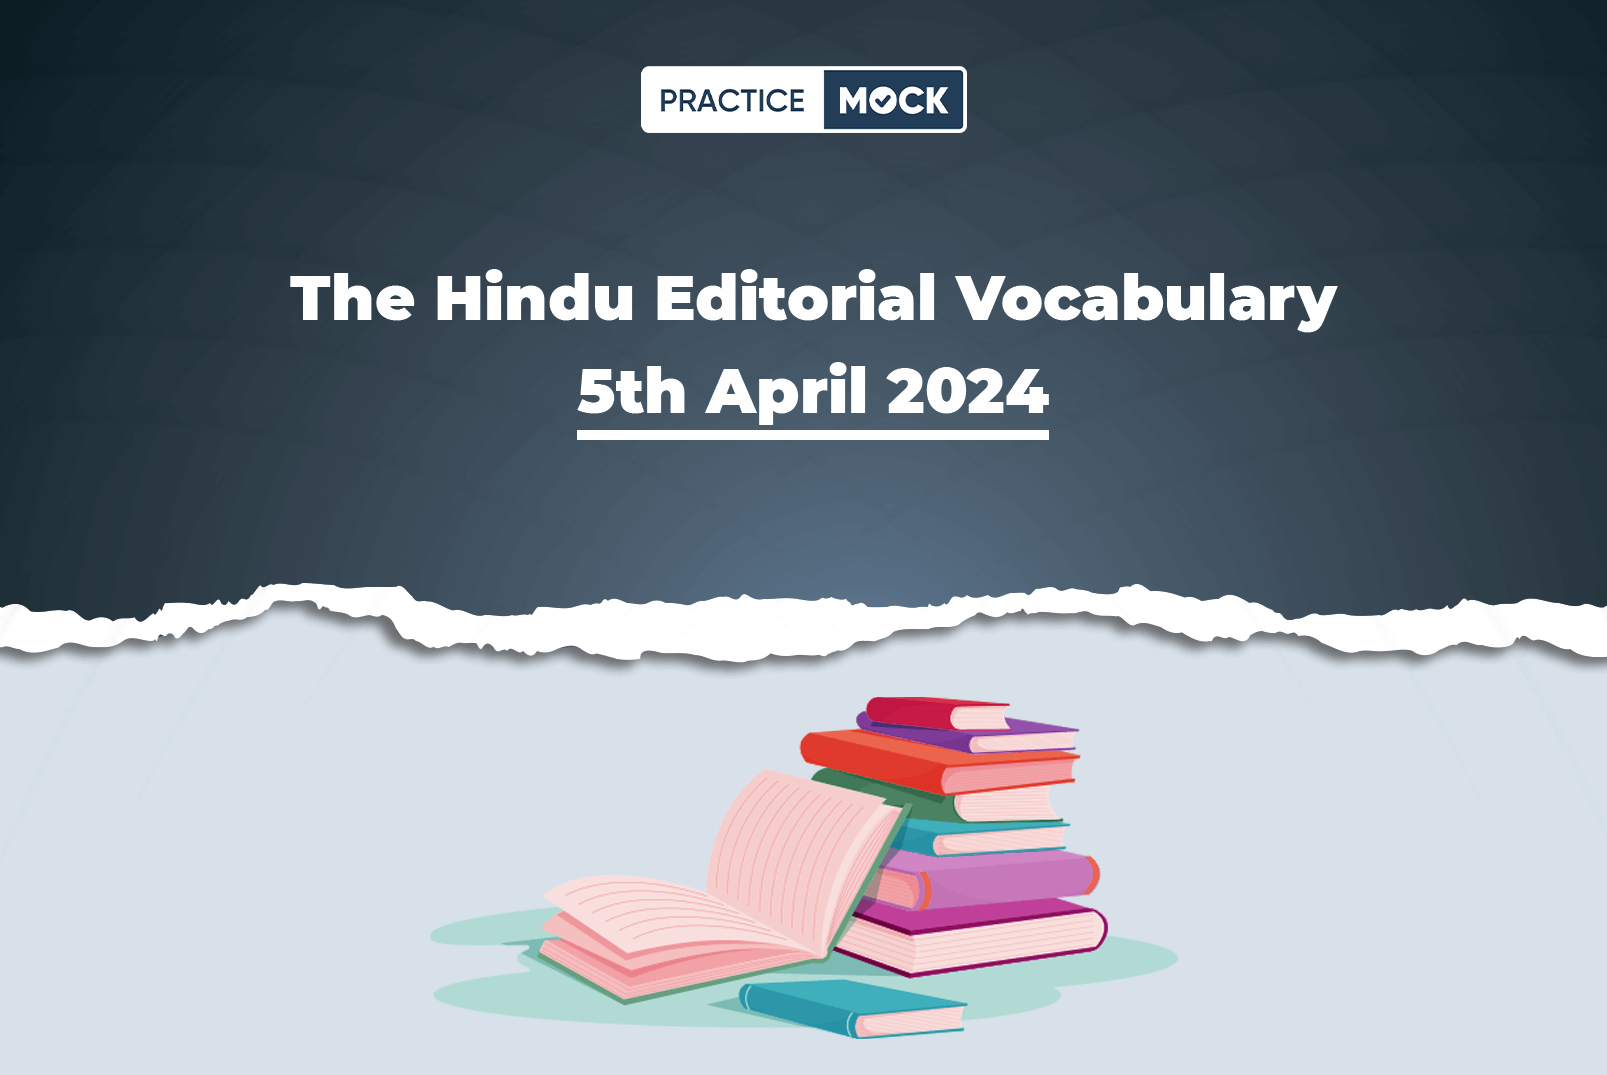 The Hindu Editorial Vocabulary 5th April 2024